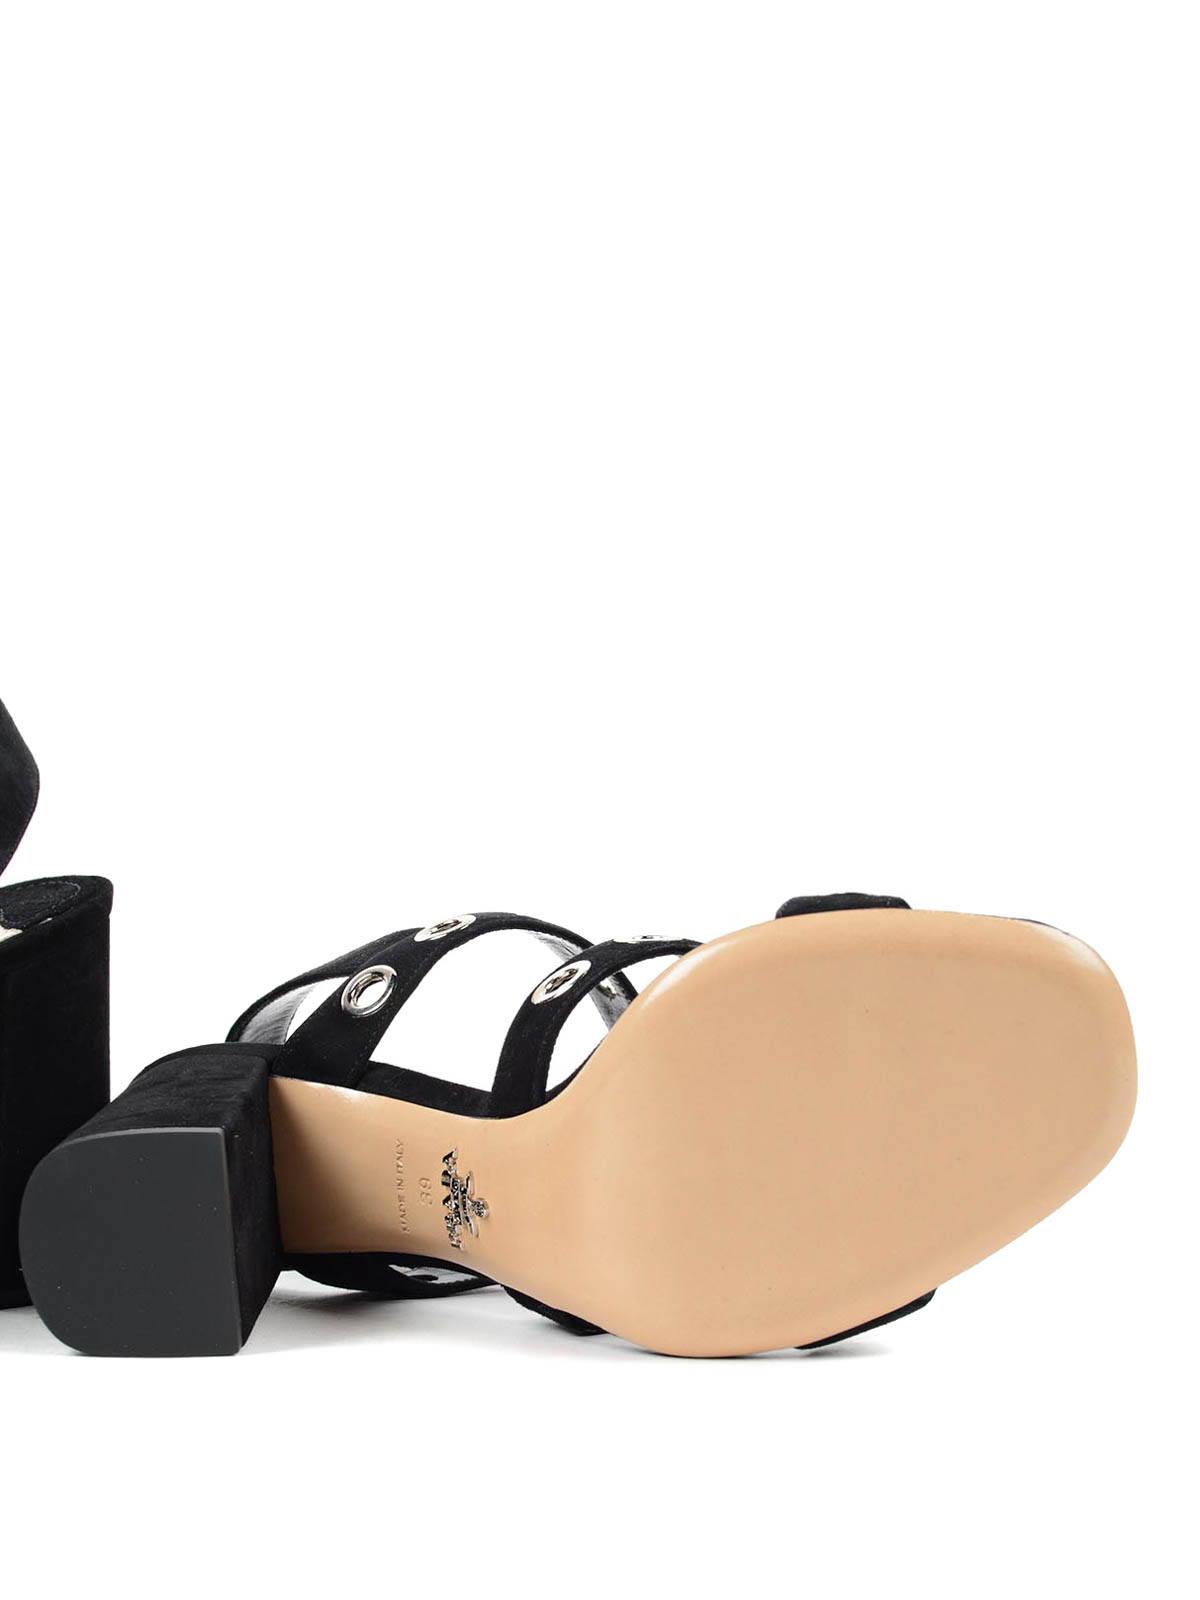 Prada Calfskin Logo Flat Slide Sandals | Neiman Marcus